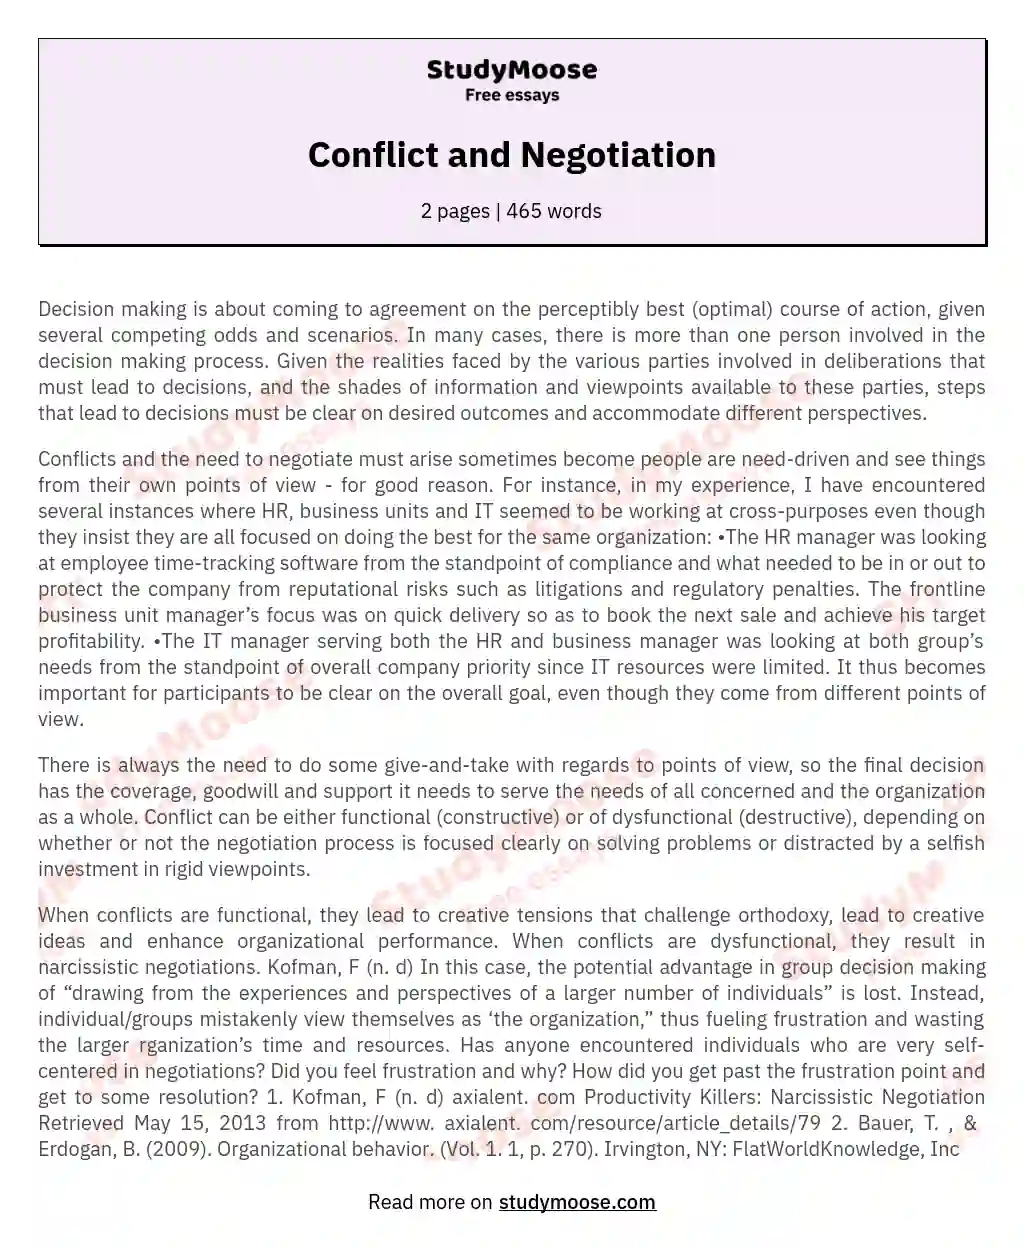 Conflict and Negotiation essay